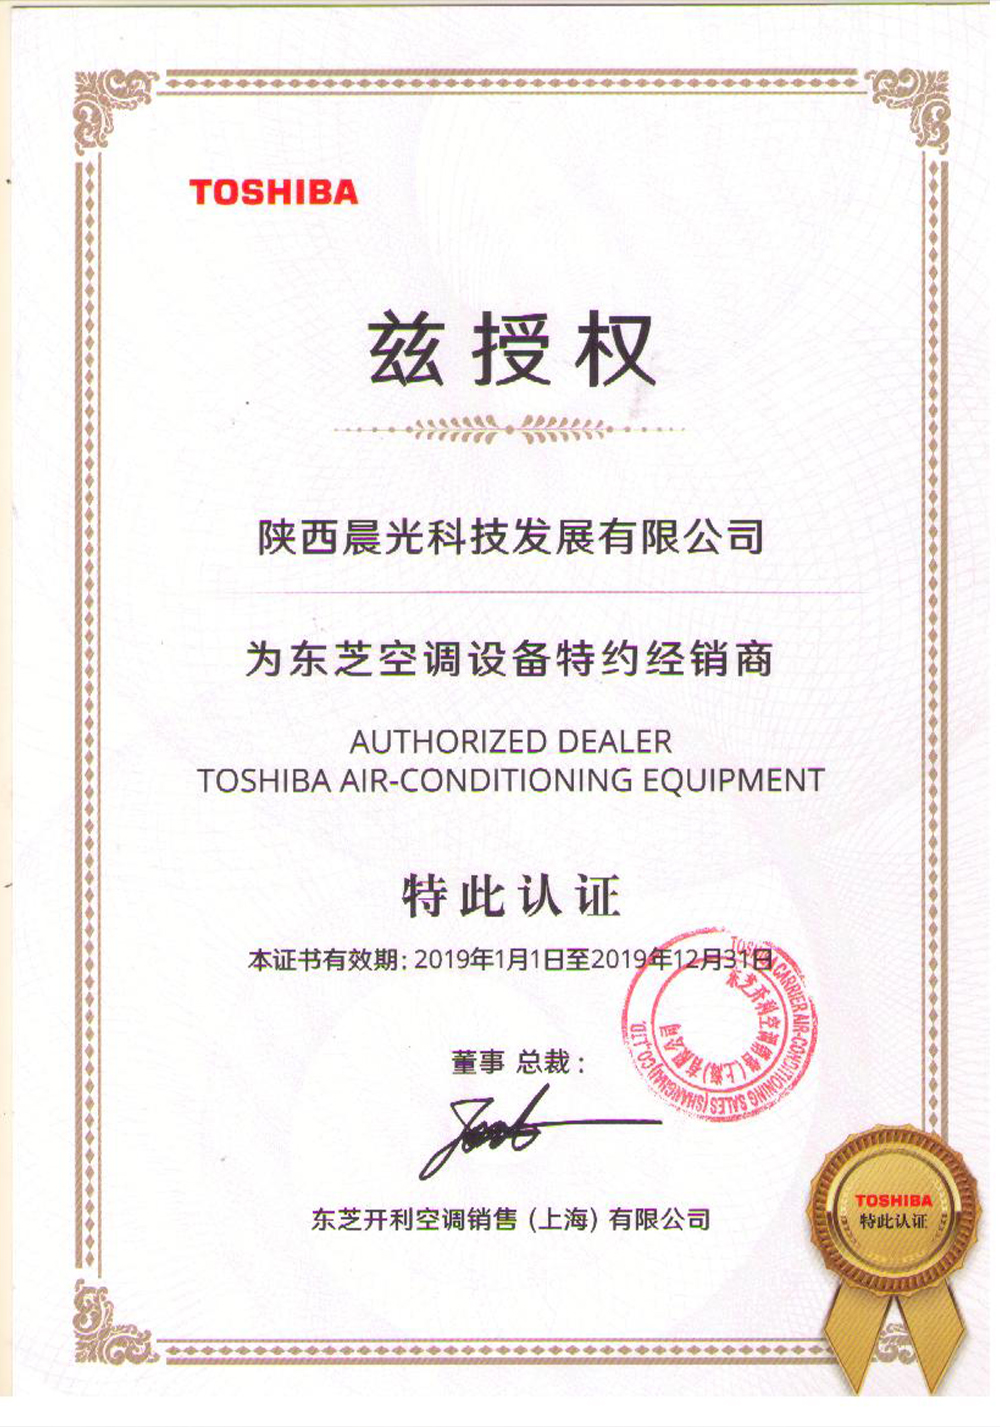 Toshiba Distribution Authorization